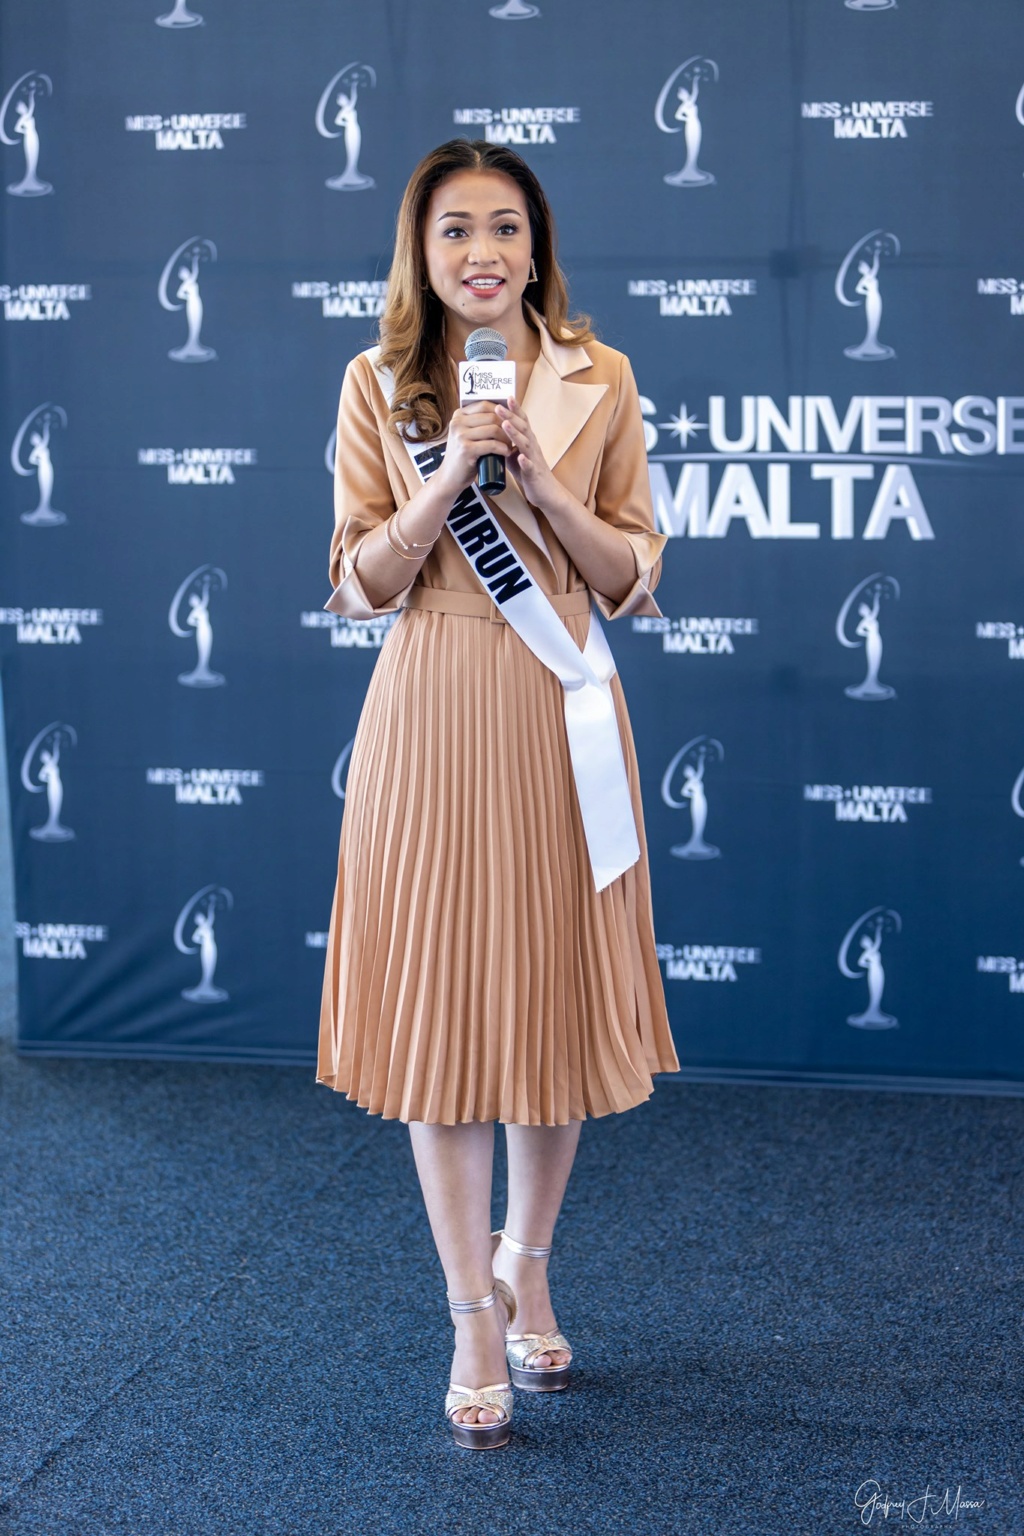 Miss Universe MALTA 2021 is Valletta - Page 2 24006012